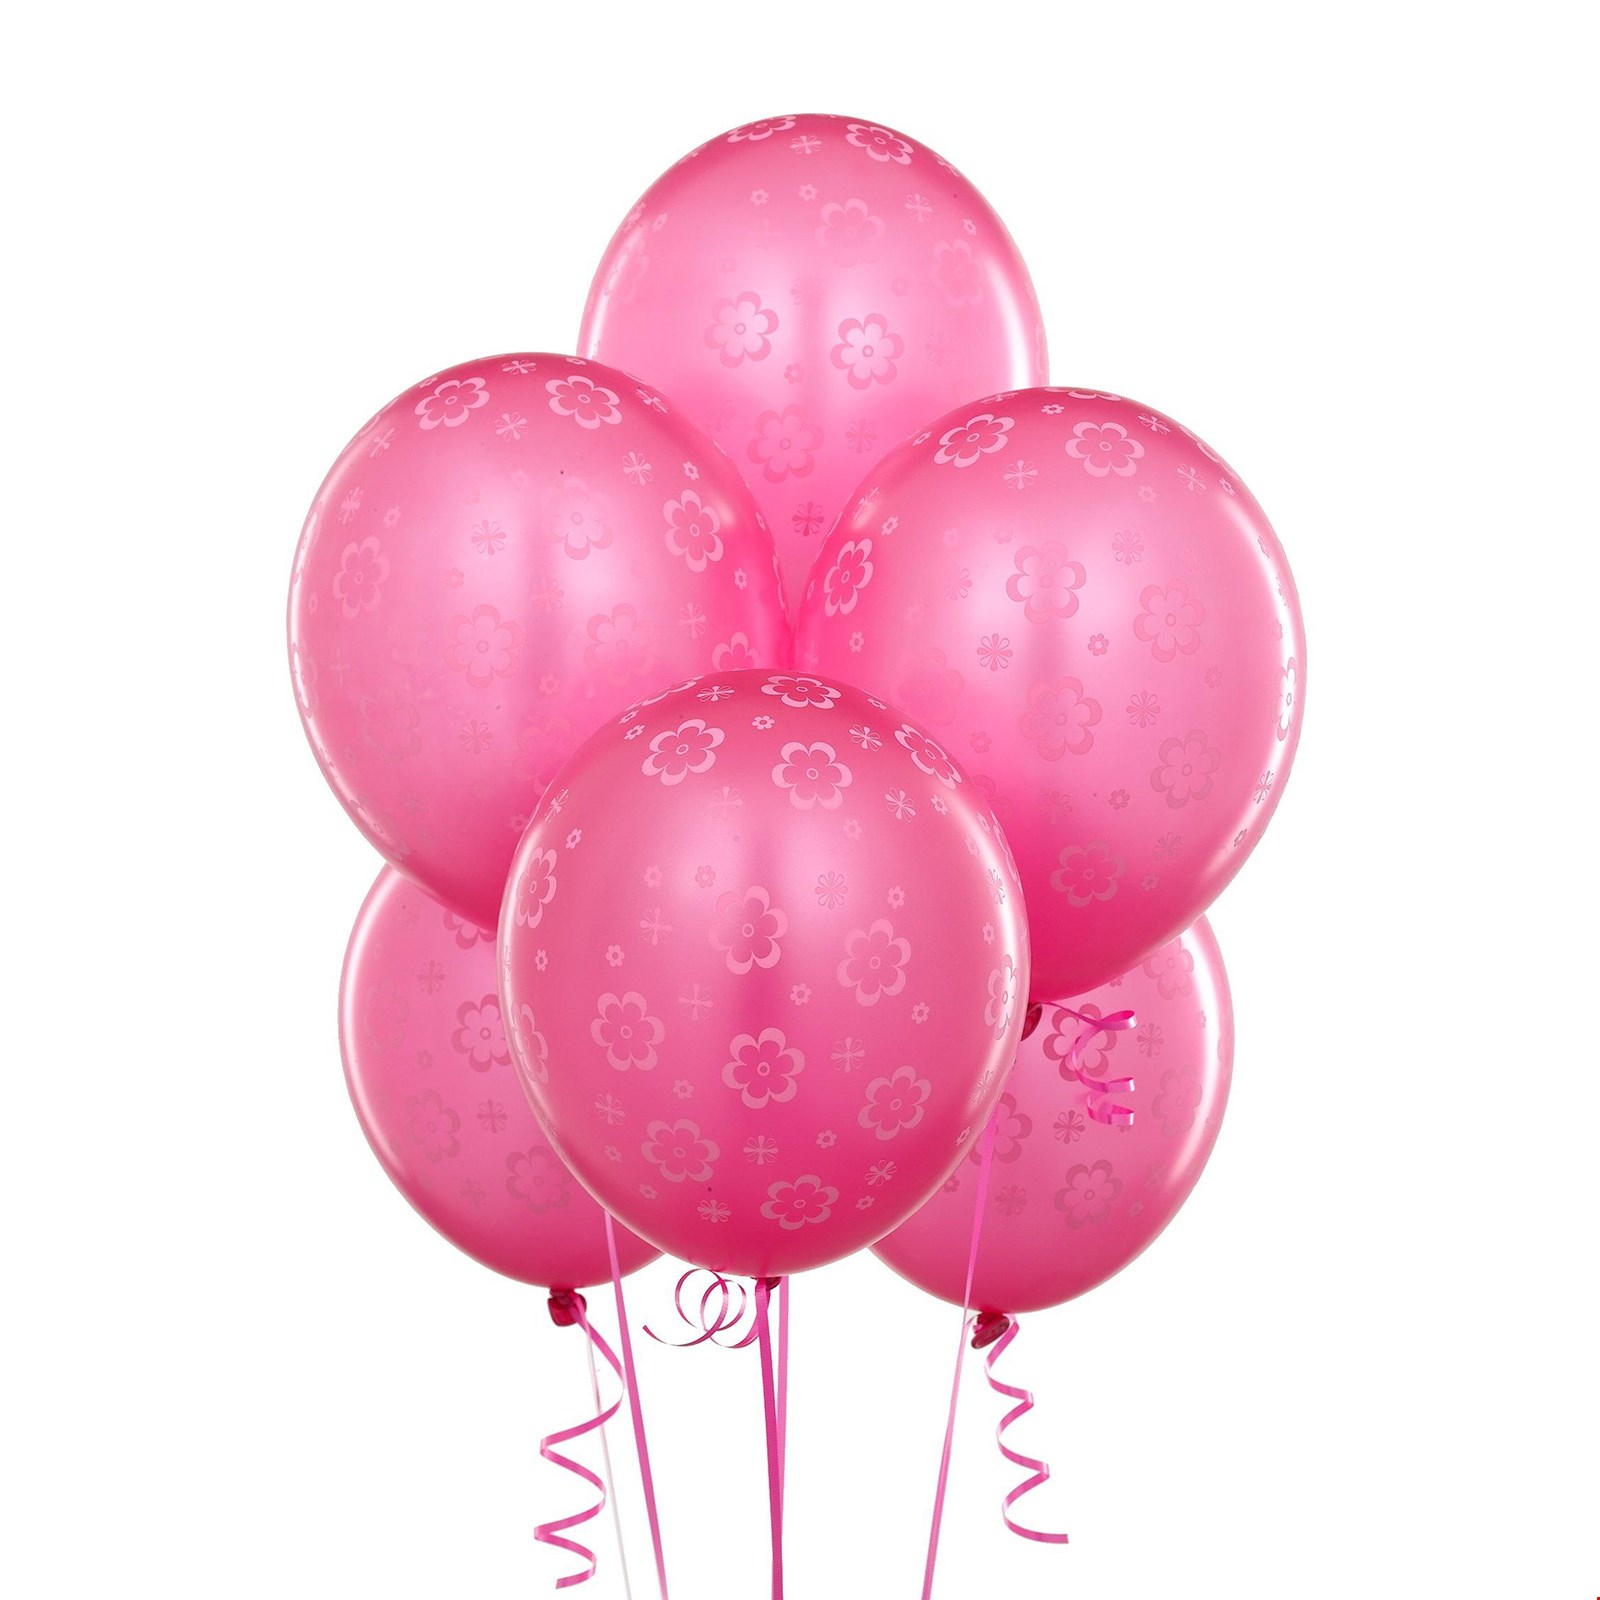 Magenta with Pink Flowers Balloons | BirthdayExpress.com